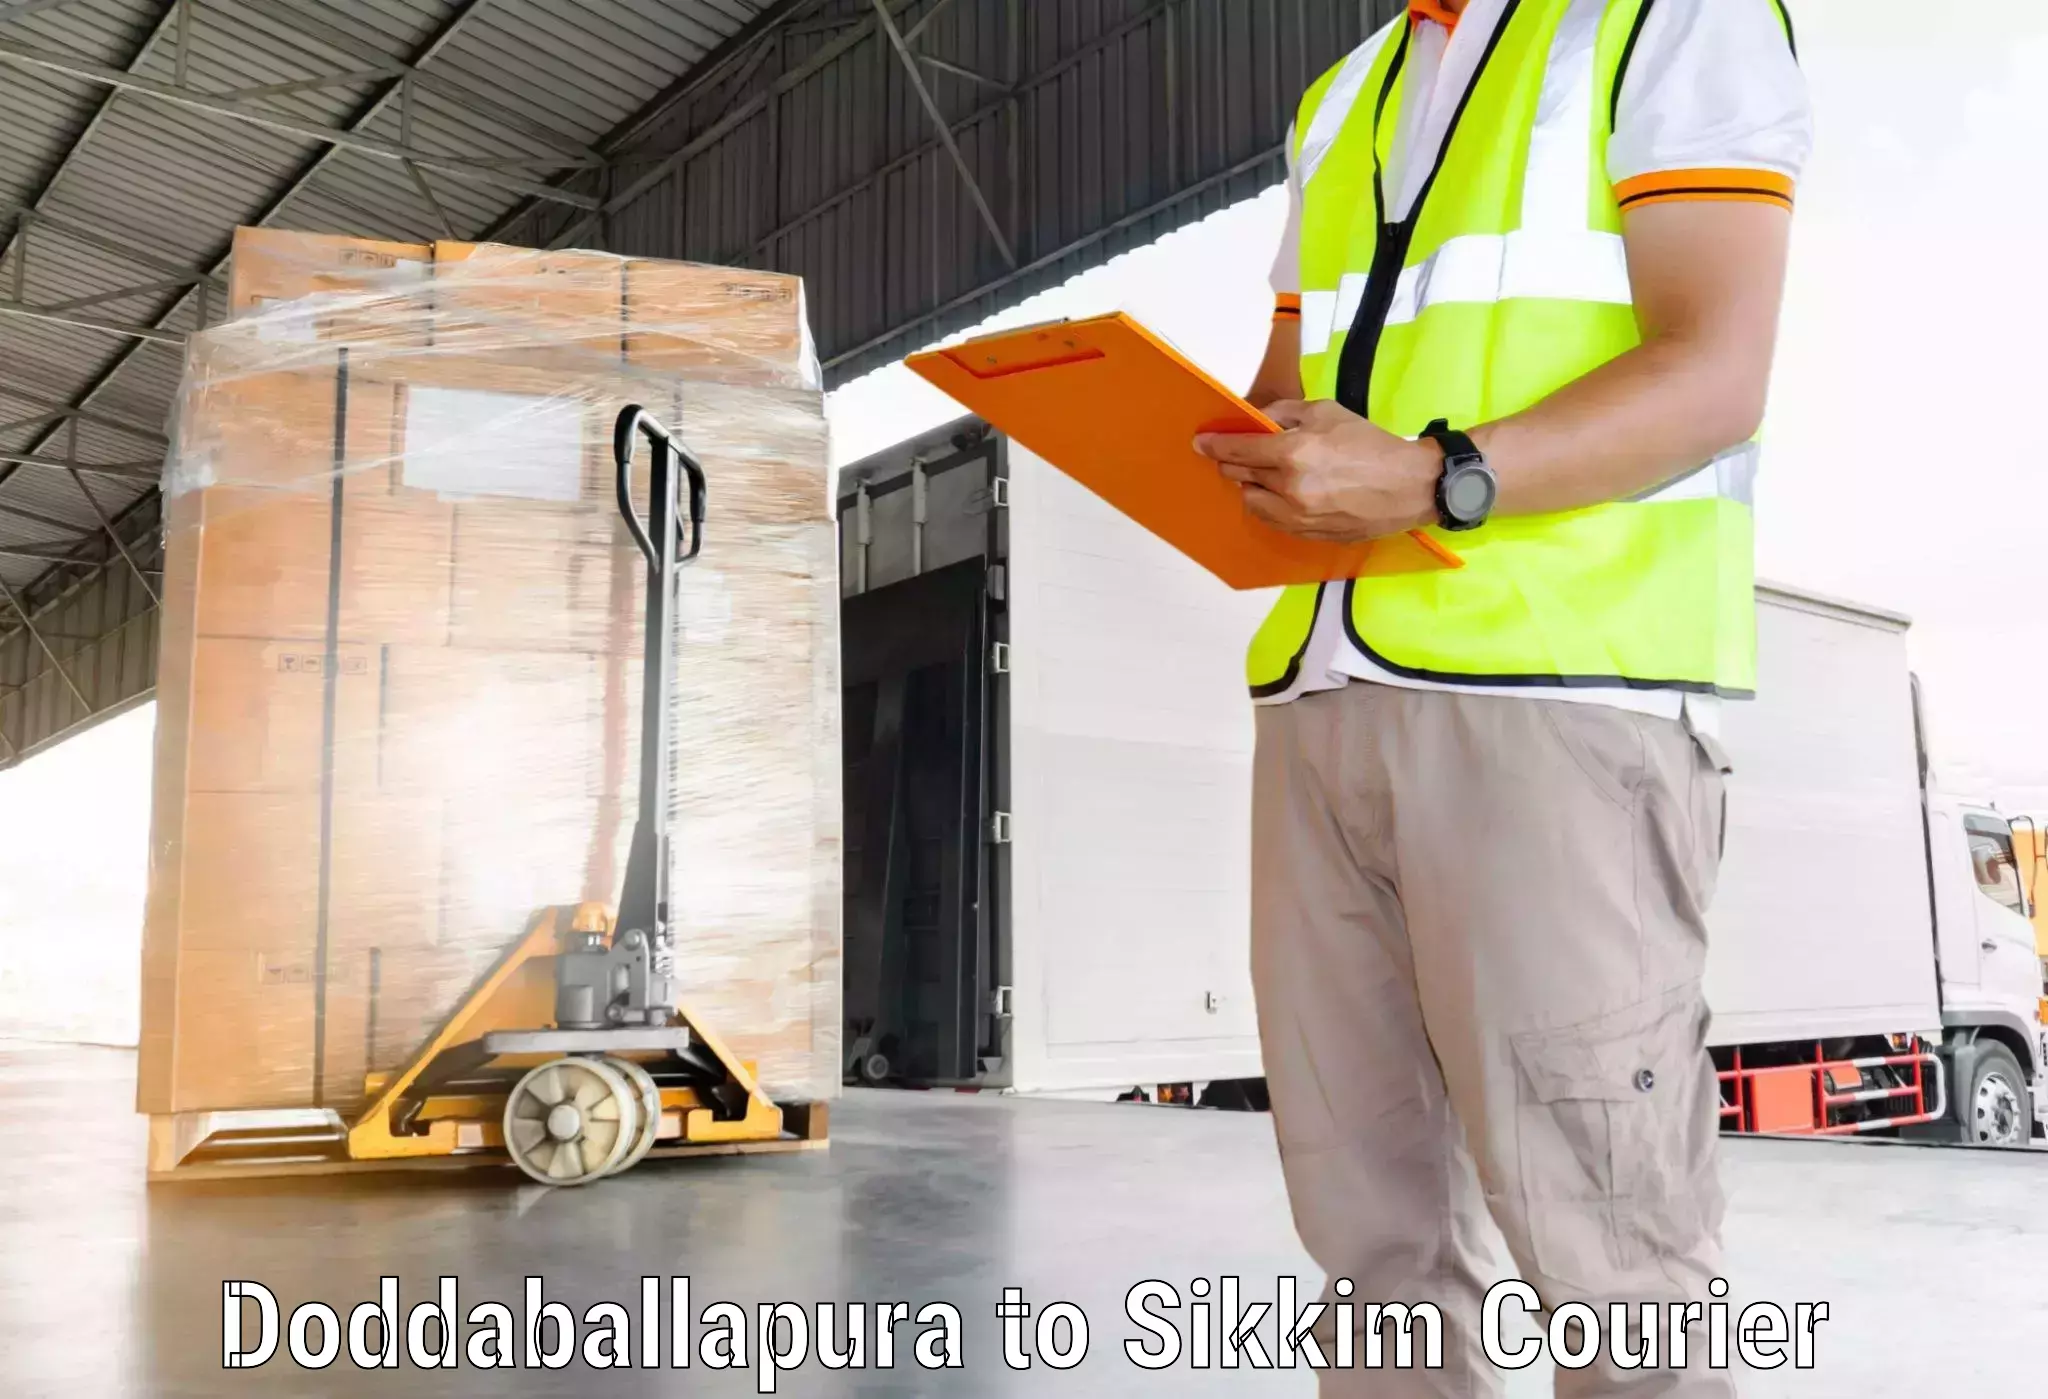 Nationwide parcel services Doddaballapura to Pelling